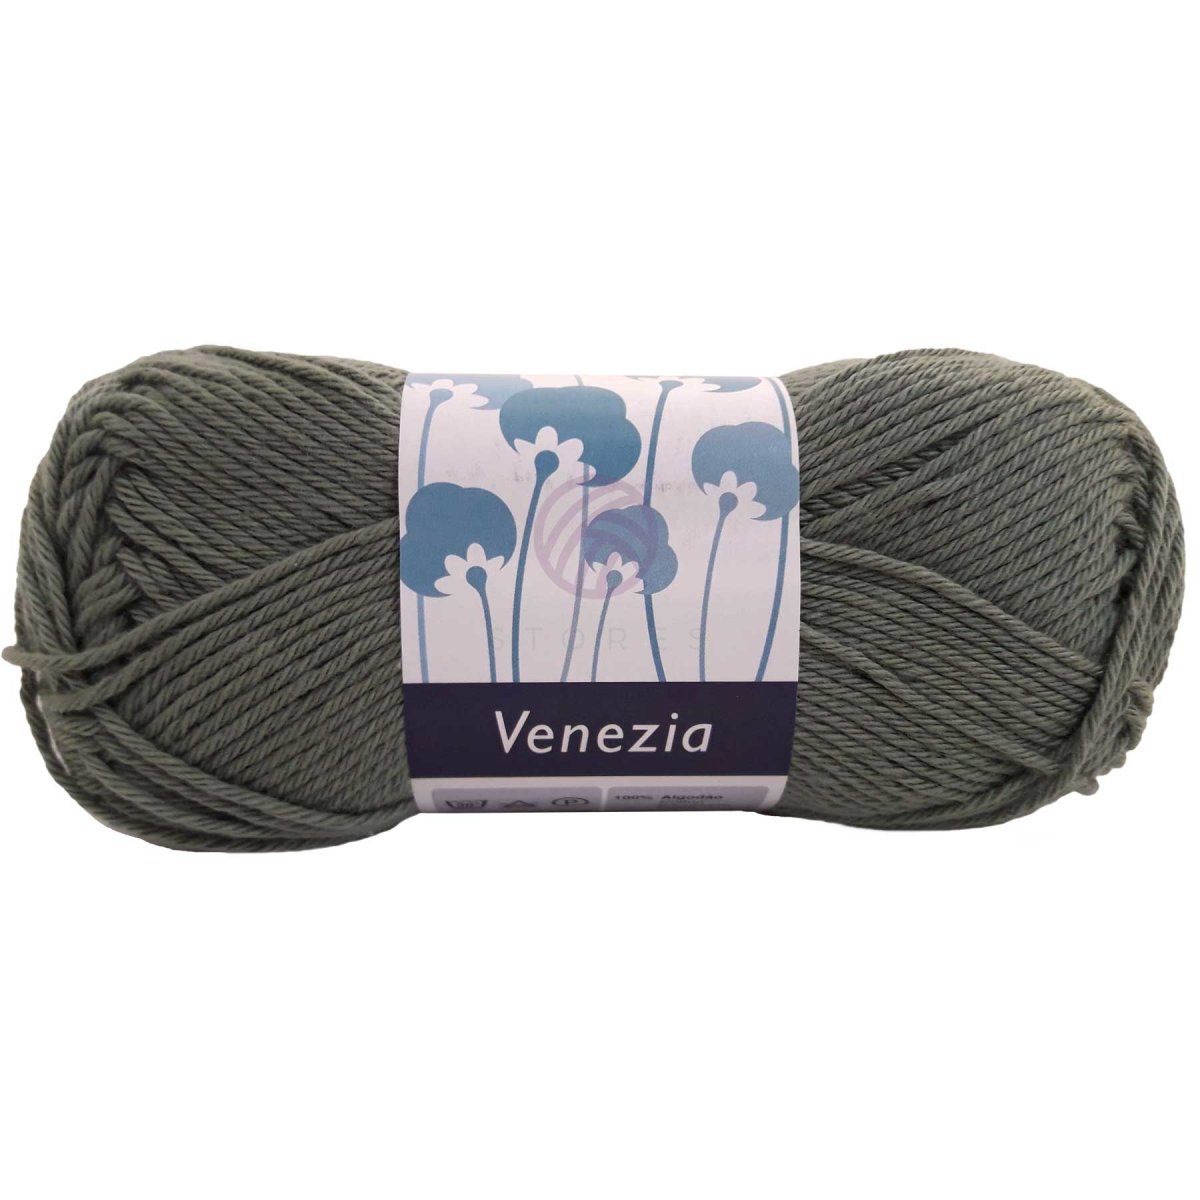 VENEZIA - Crochetstores204-195606850204190